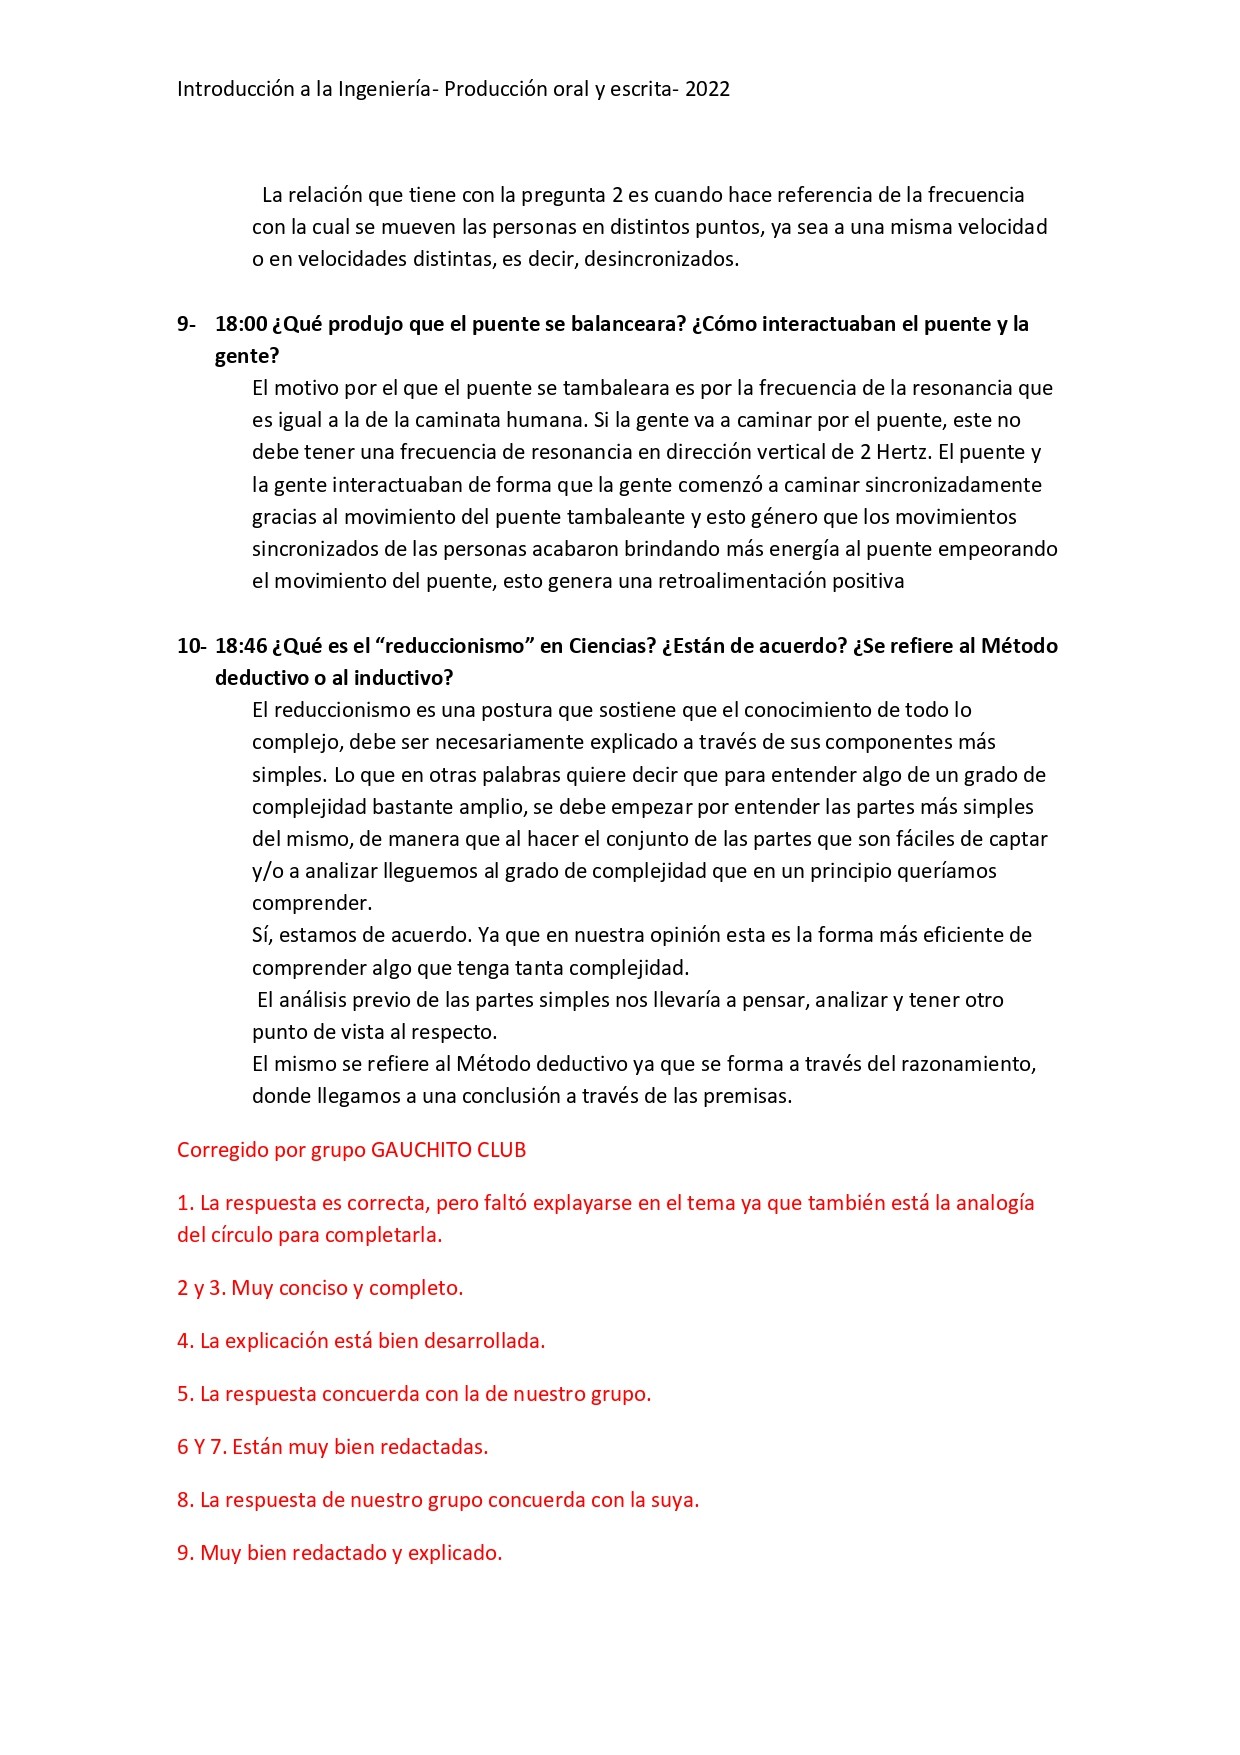 TP3 Sincronización - Grupo Cerati (1)_page-0003.jpg